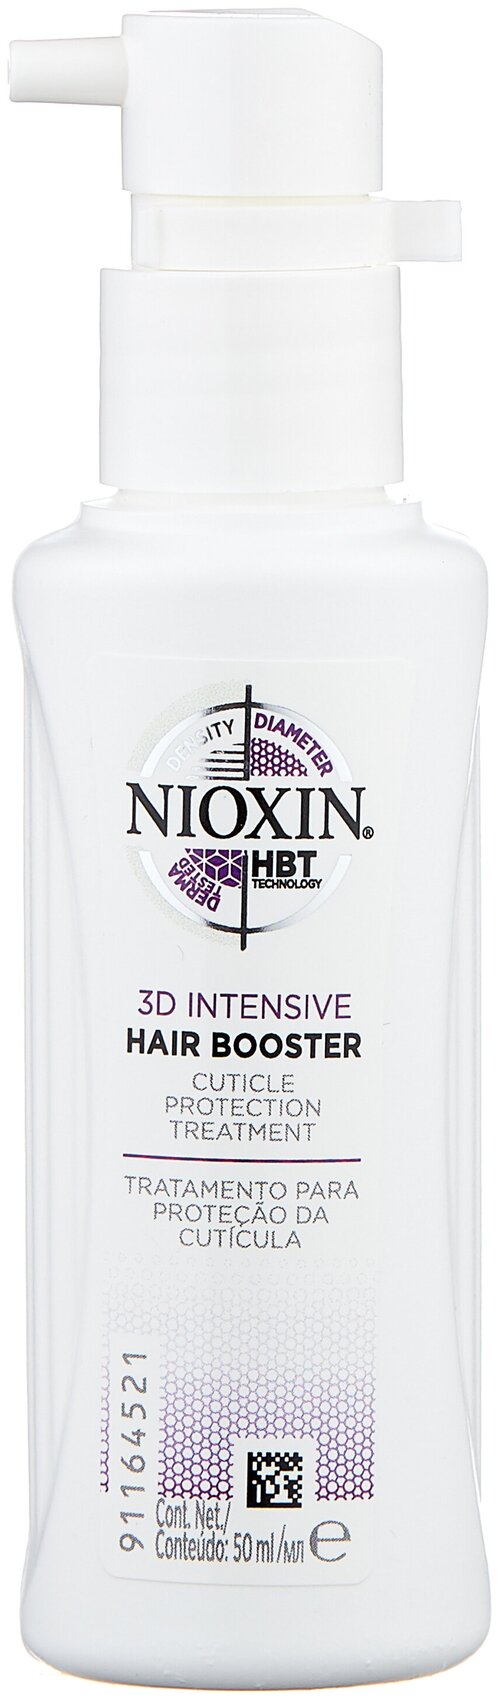 Nioxin Intensive Treatment Усилитель роста волос, 120 г, 50 мл, бутылка